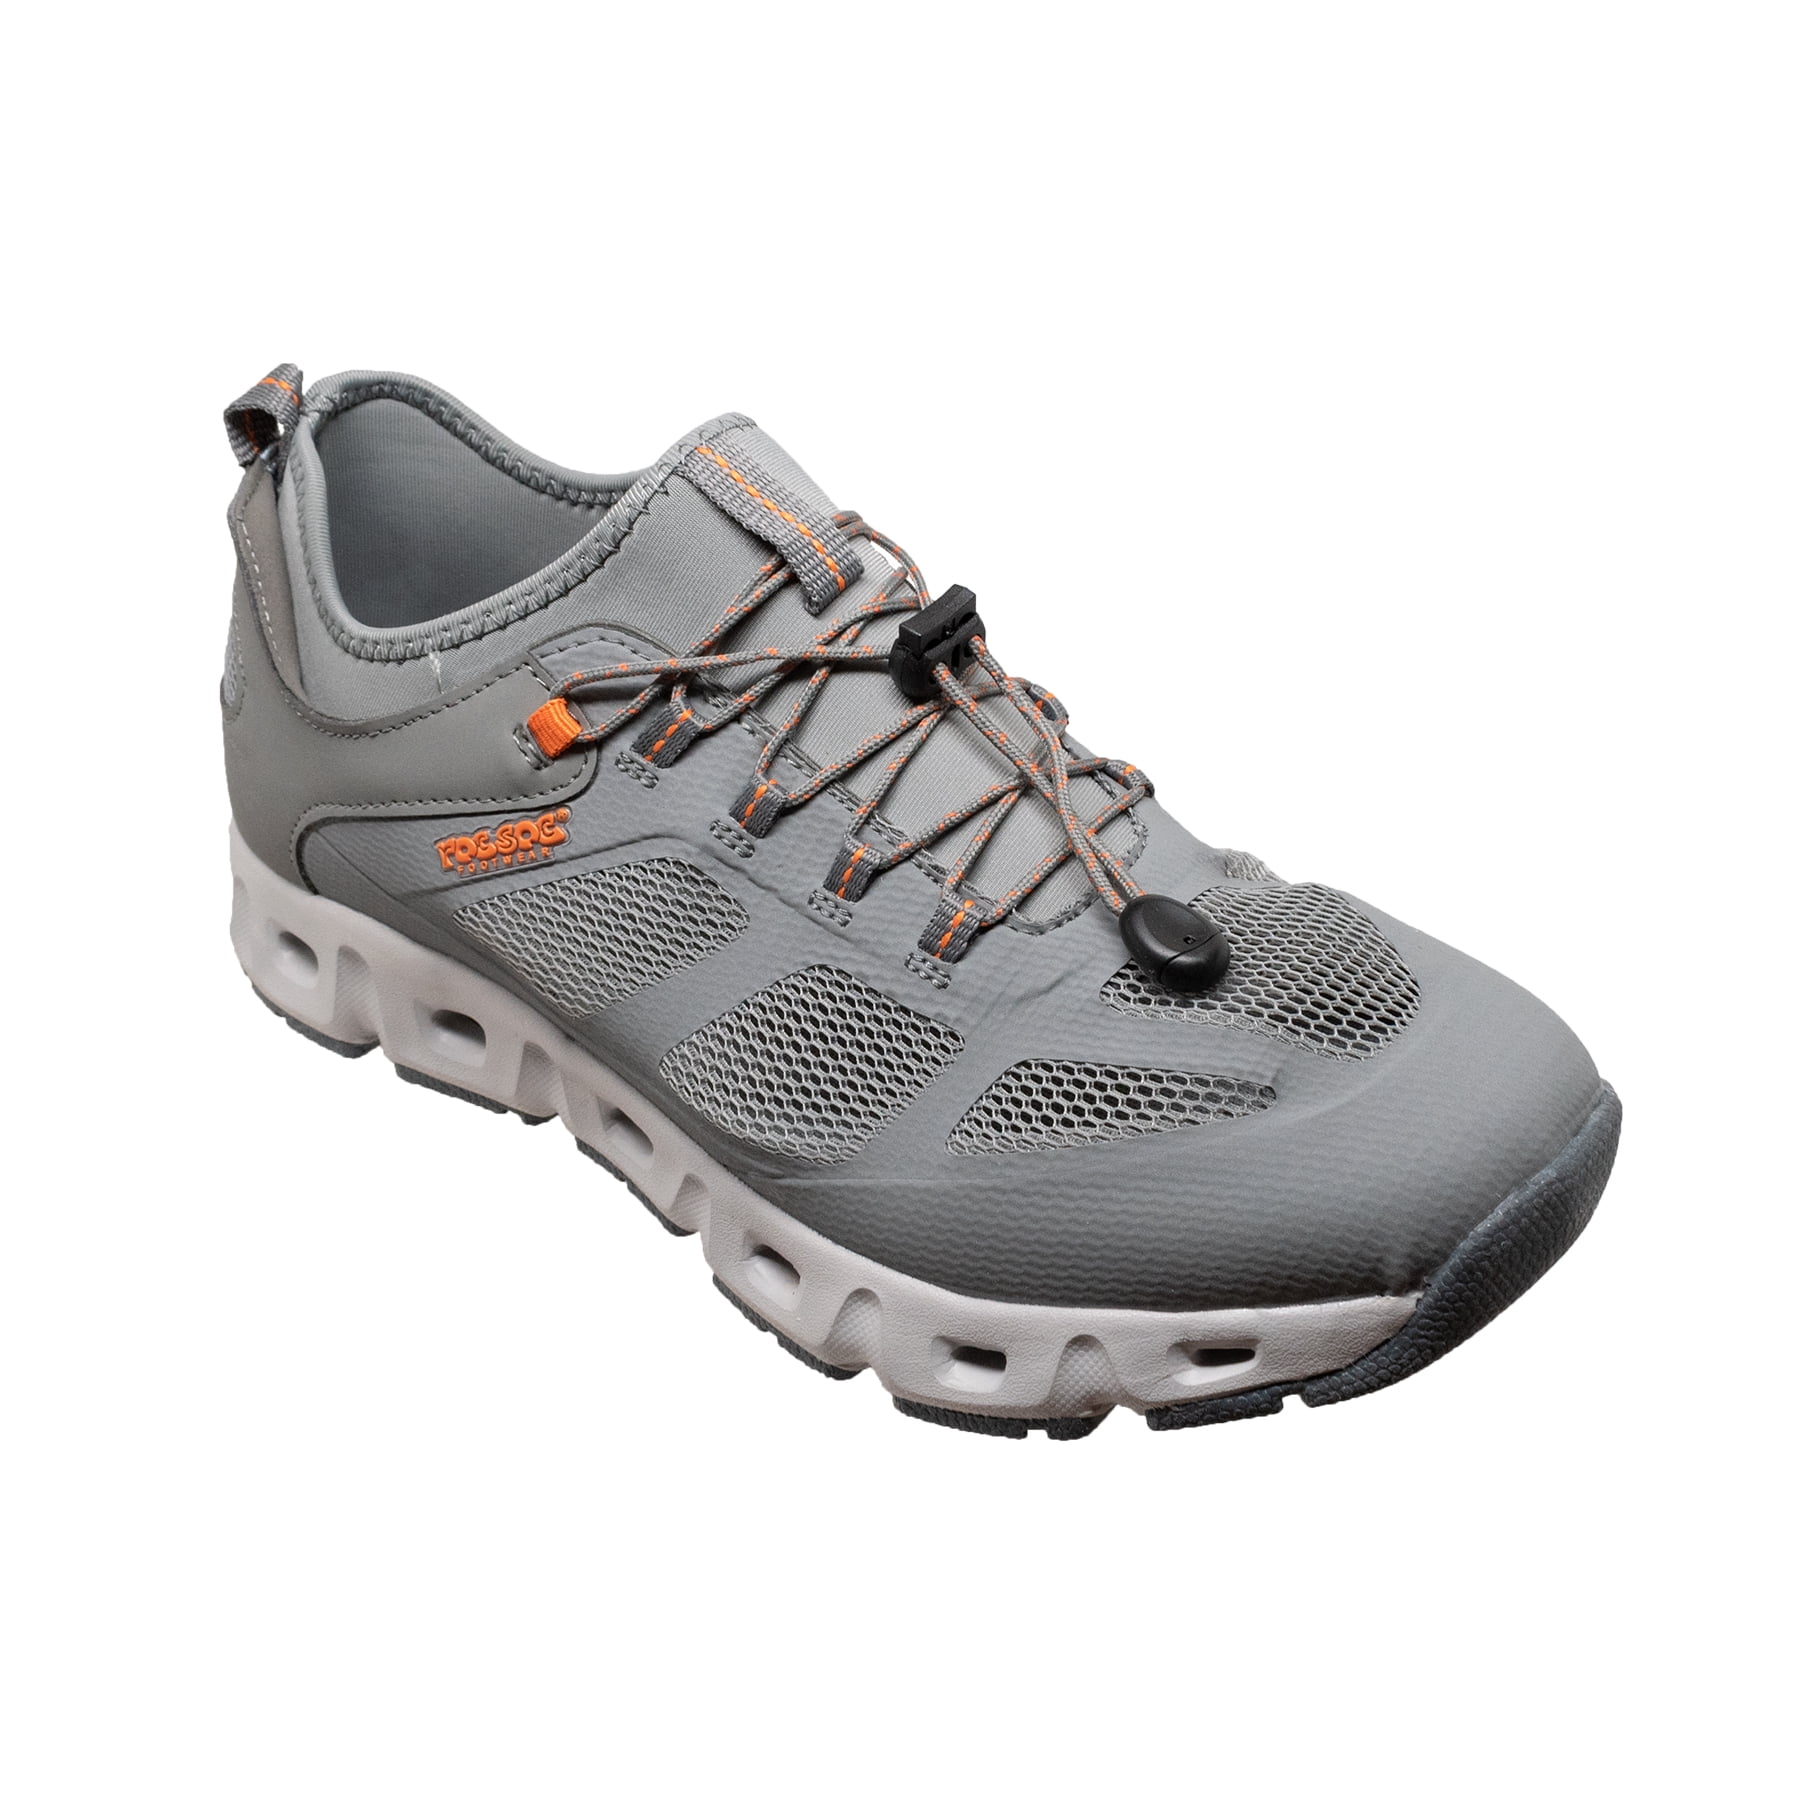 RocSoc Men's Trail Hiker Shoe, Grey - Walmart.com